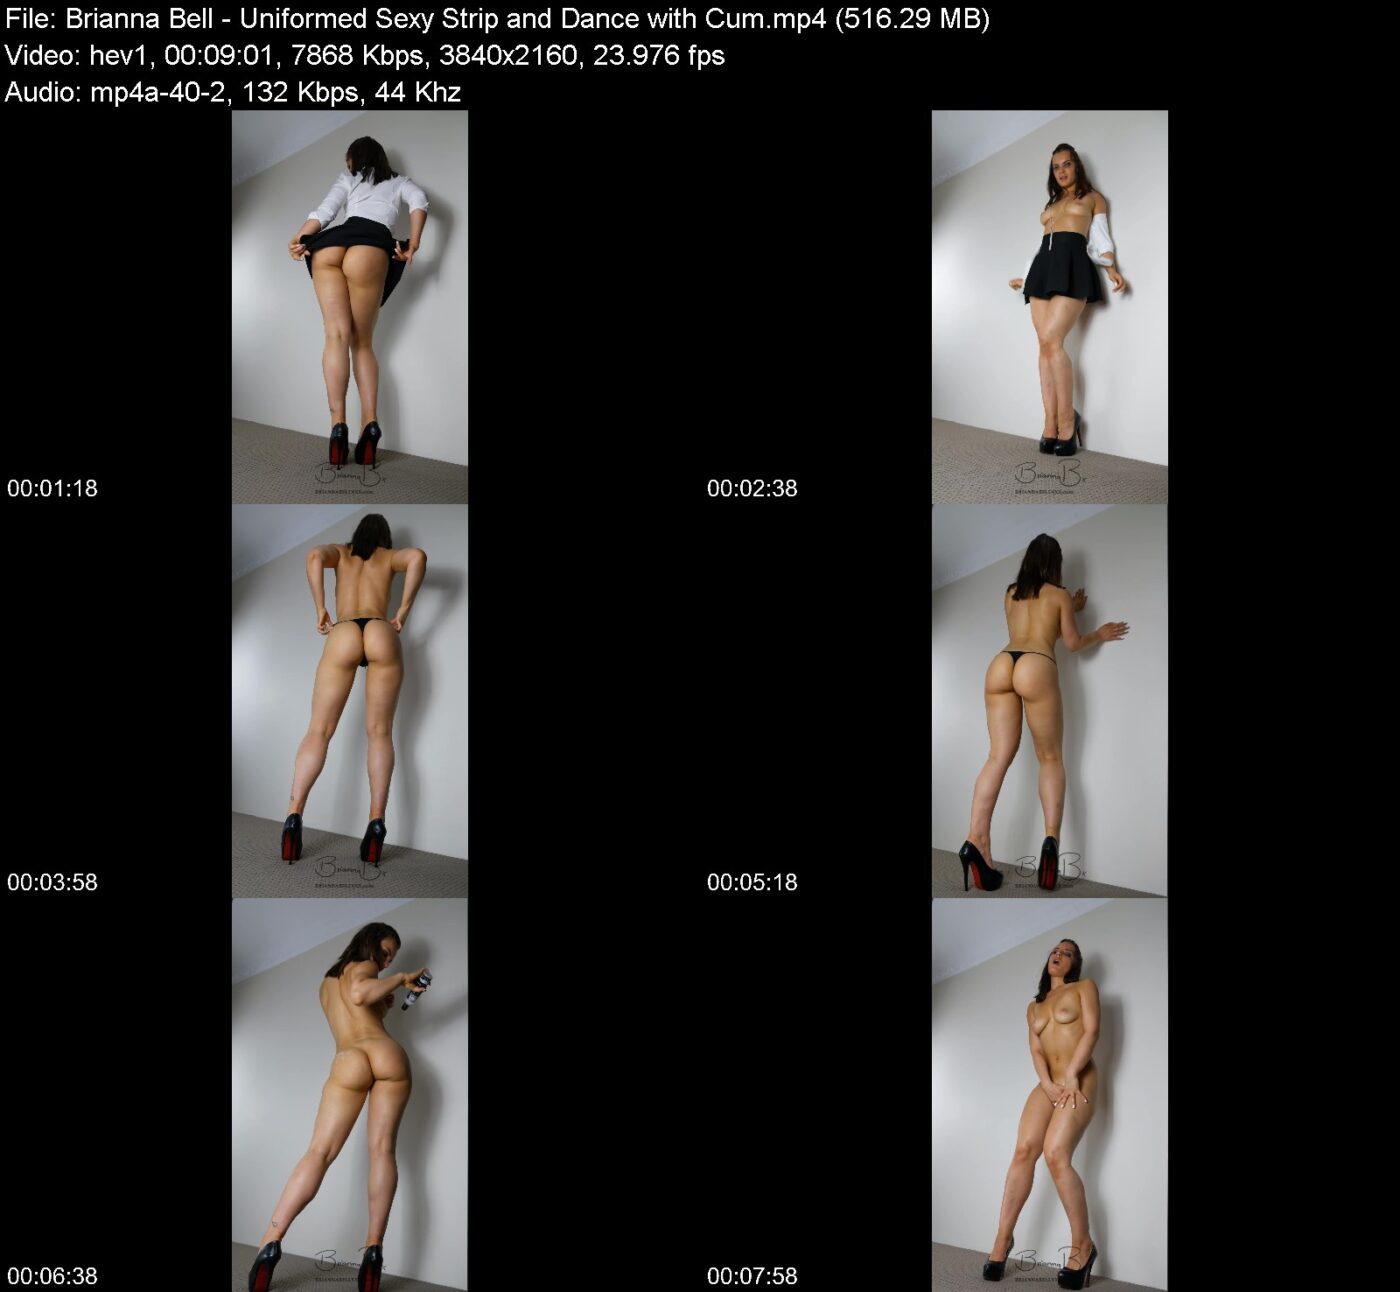 Brianna Bell in Uniformed Sexy Strip & Dance with Cum